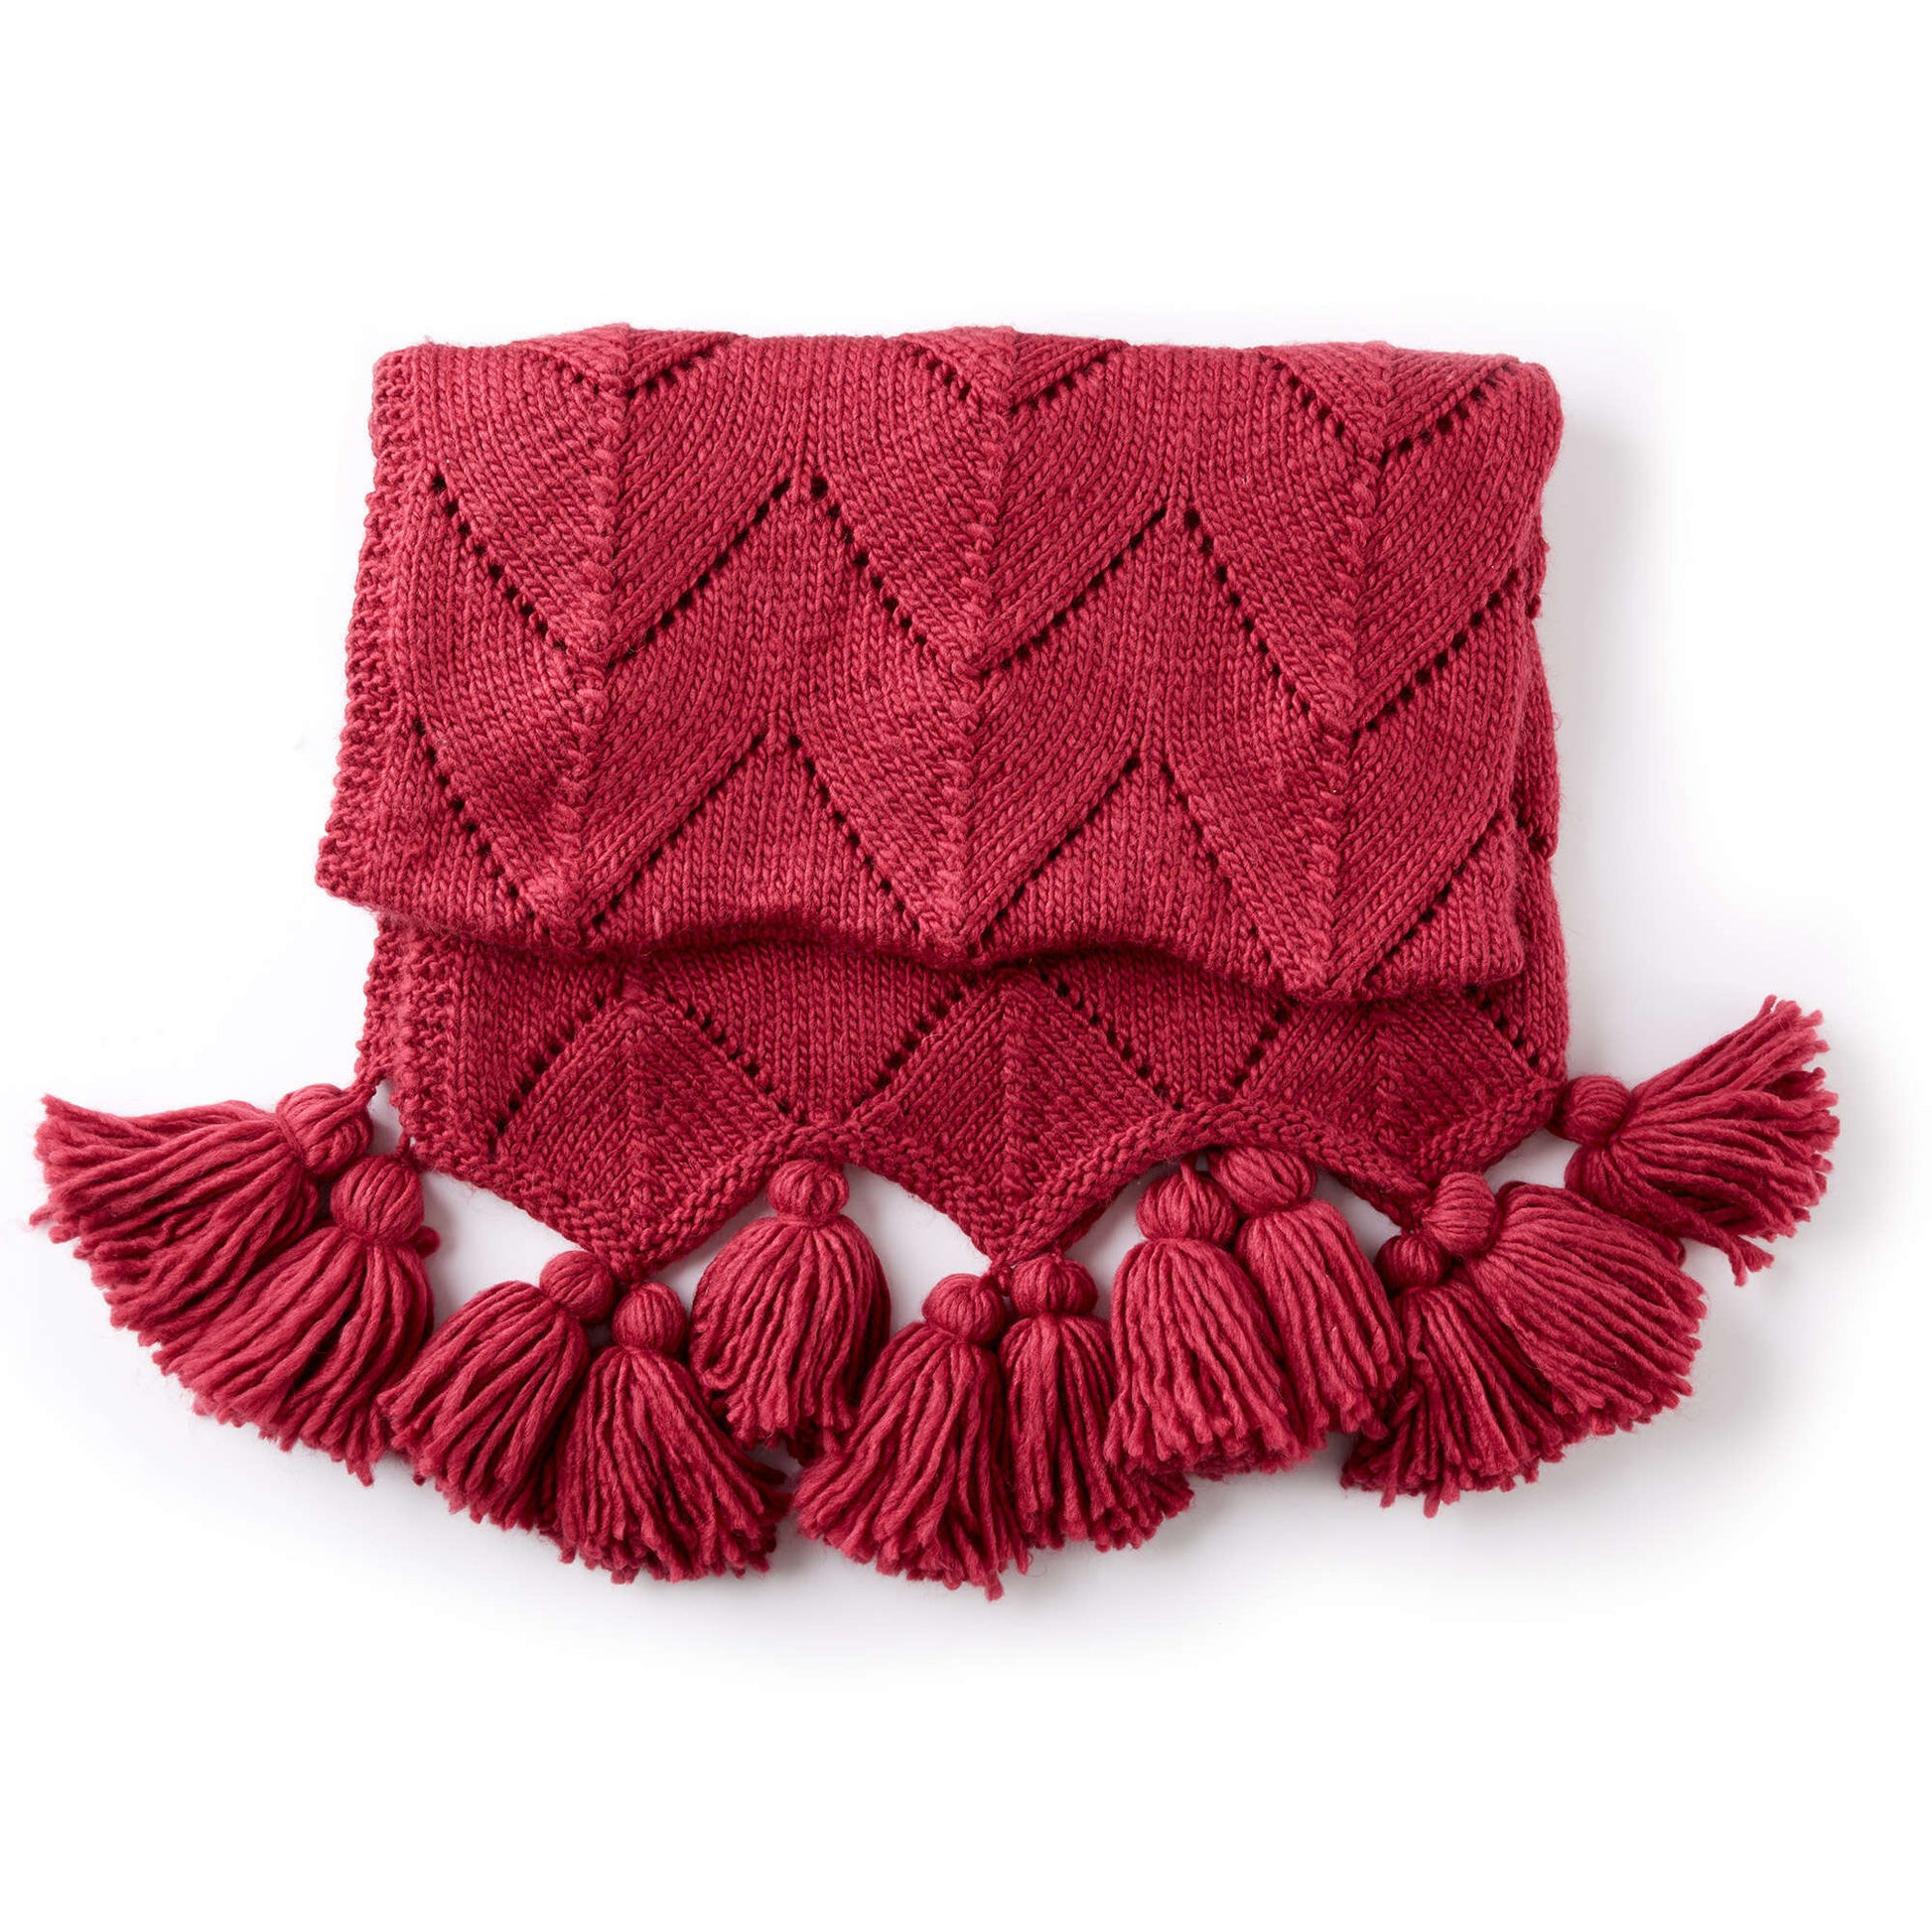 Free Bernat Horseshoe Lace Tasseled Knit Blanket Pattern